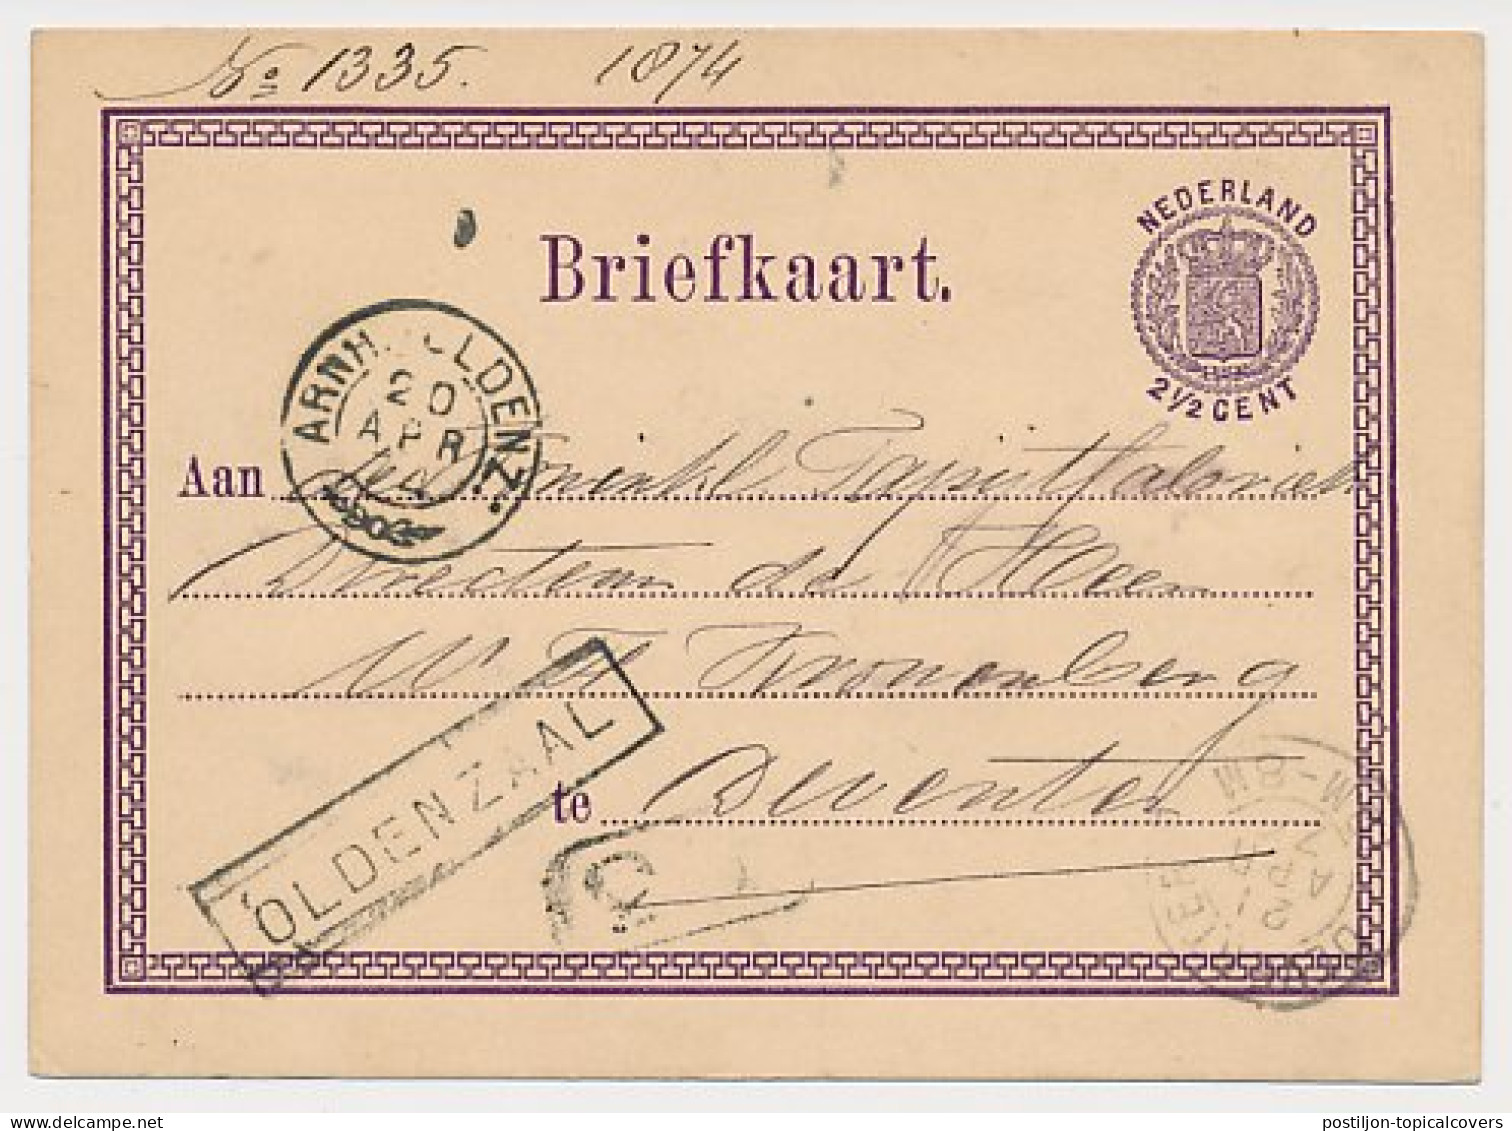 Trein Haltestempel Oldenzaal 1874 - Covers & Documents